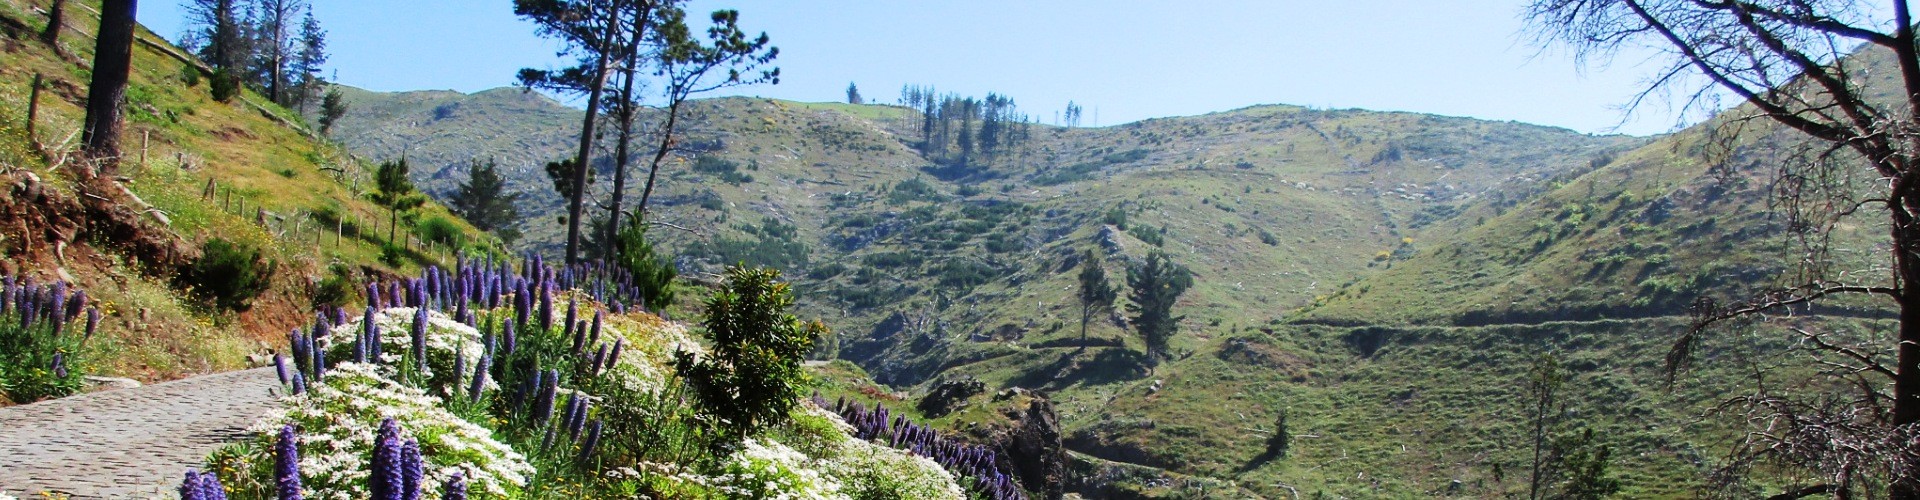 Parque Ecologico do Funchal Ecological Park, Madeira